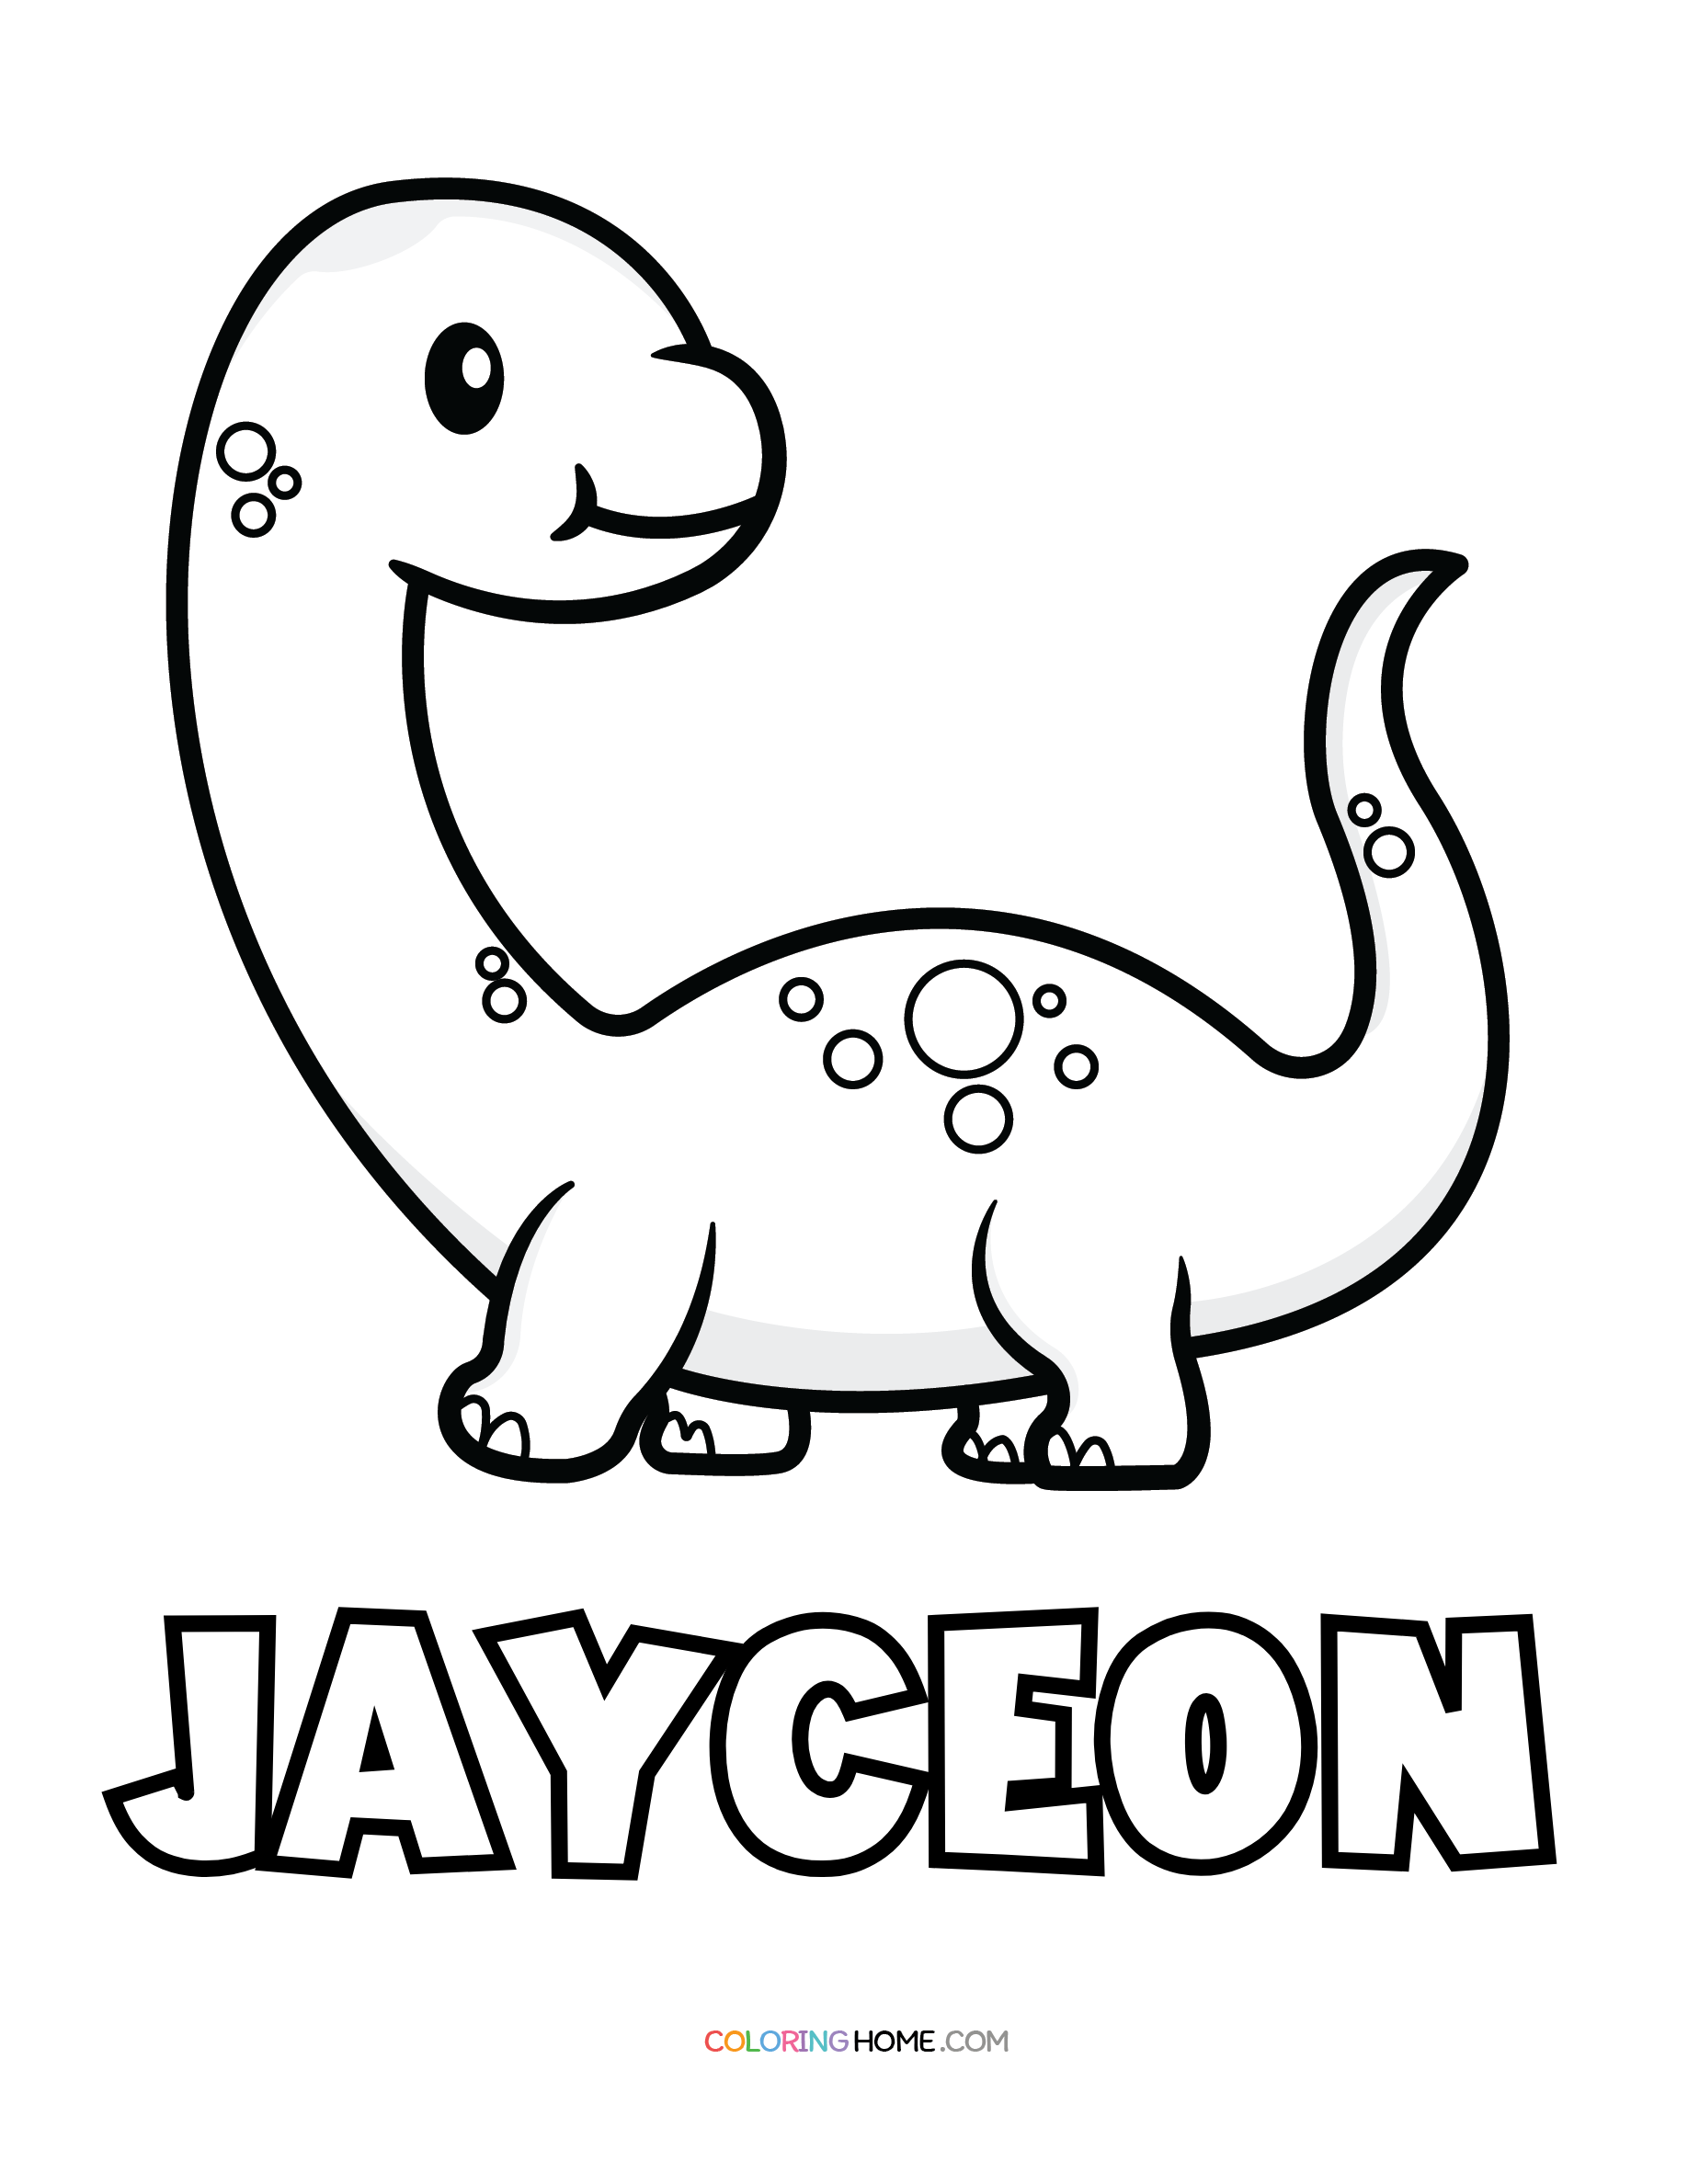 Jayceon dinosaur coloring page